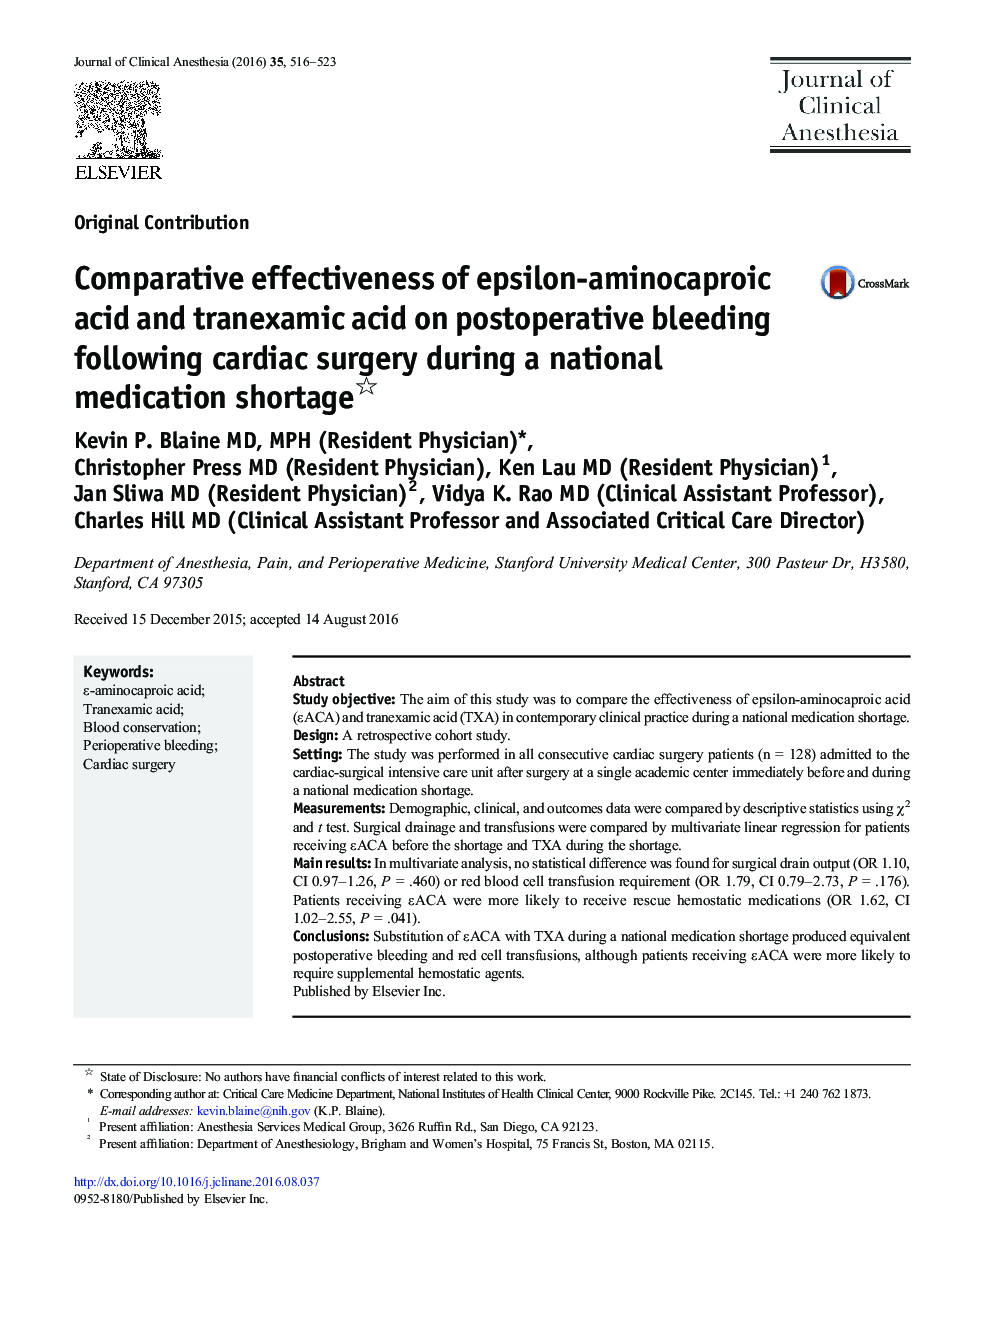 Comparative effectiveness of epsilon-aminocaproic acid and tranexamic acid on postoperative bleeding following cardiac surgery during a national medication shortage